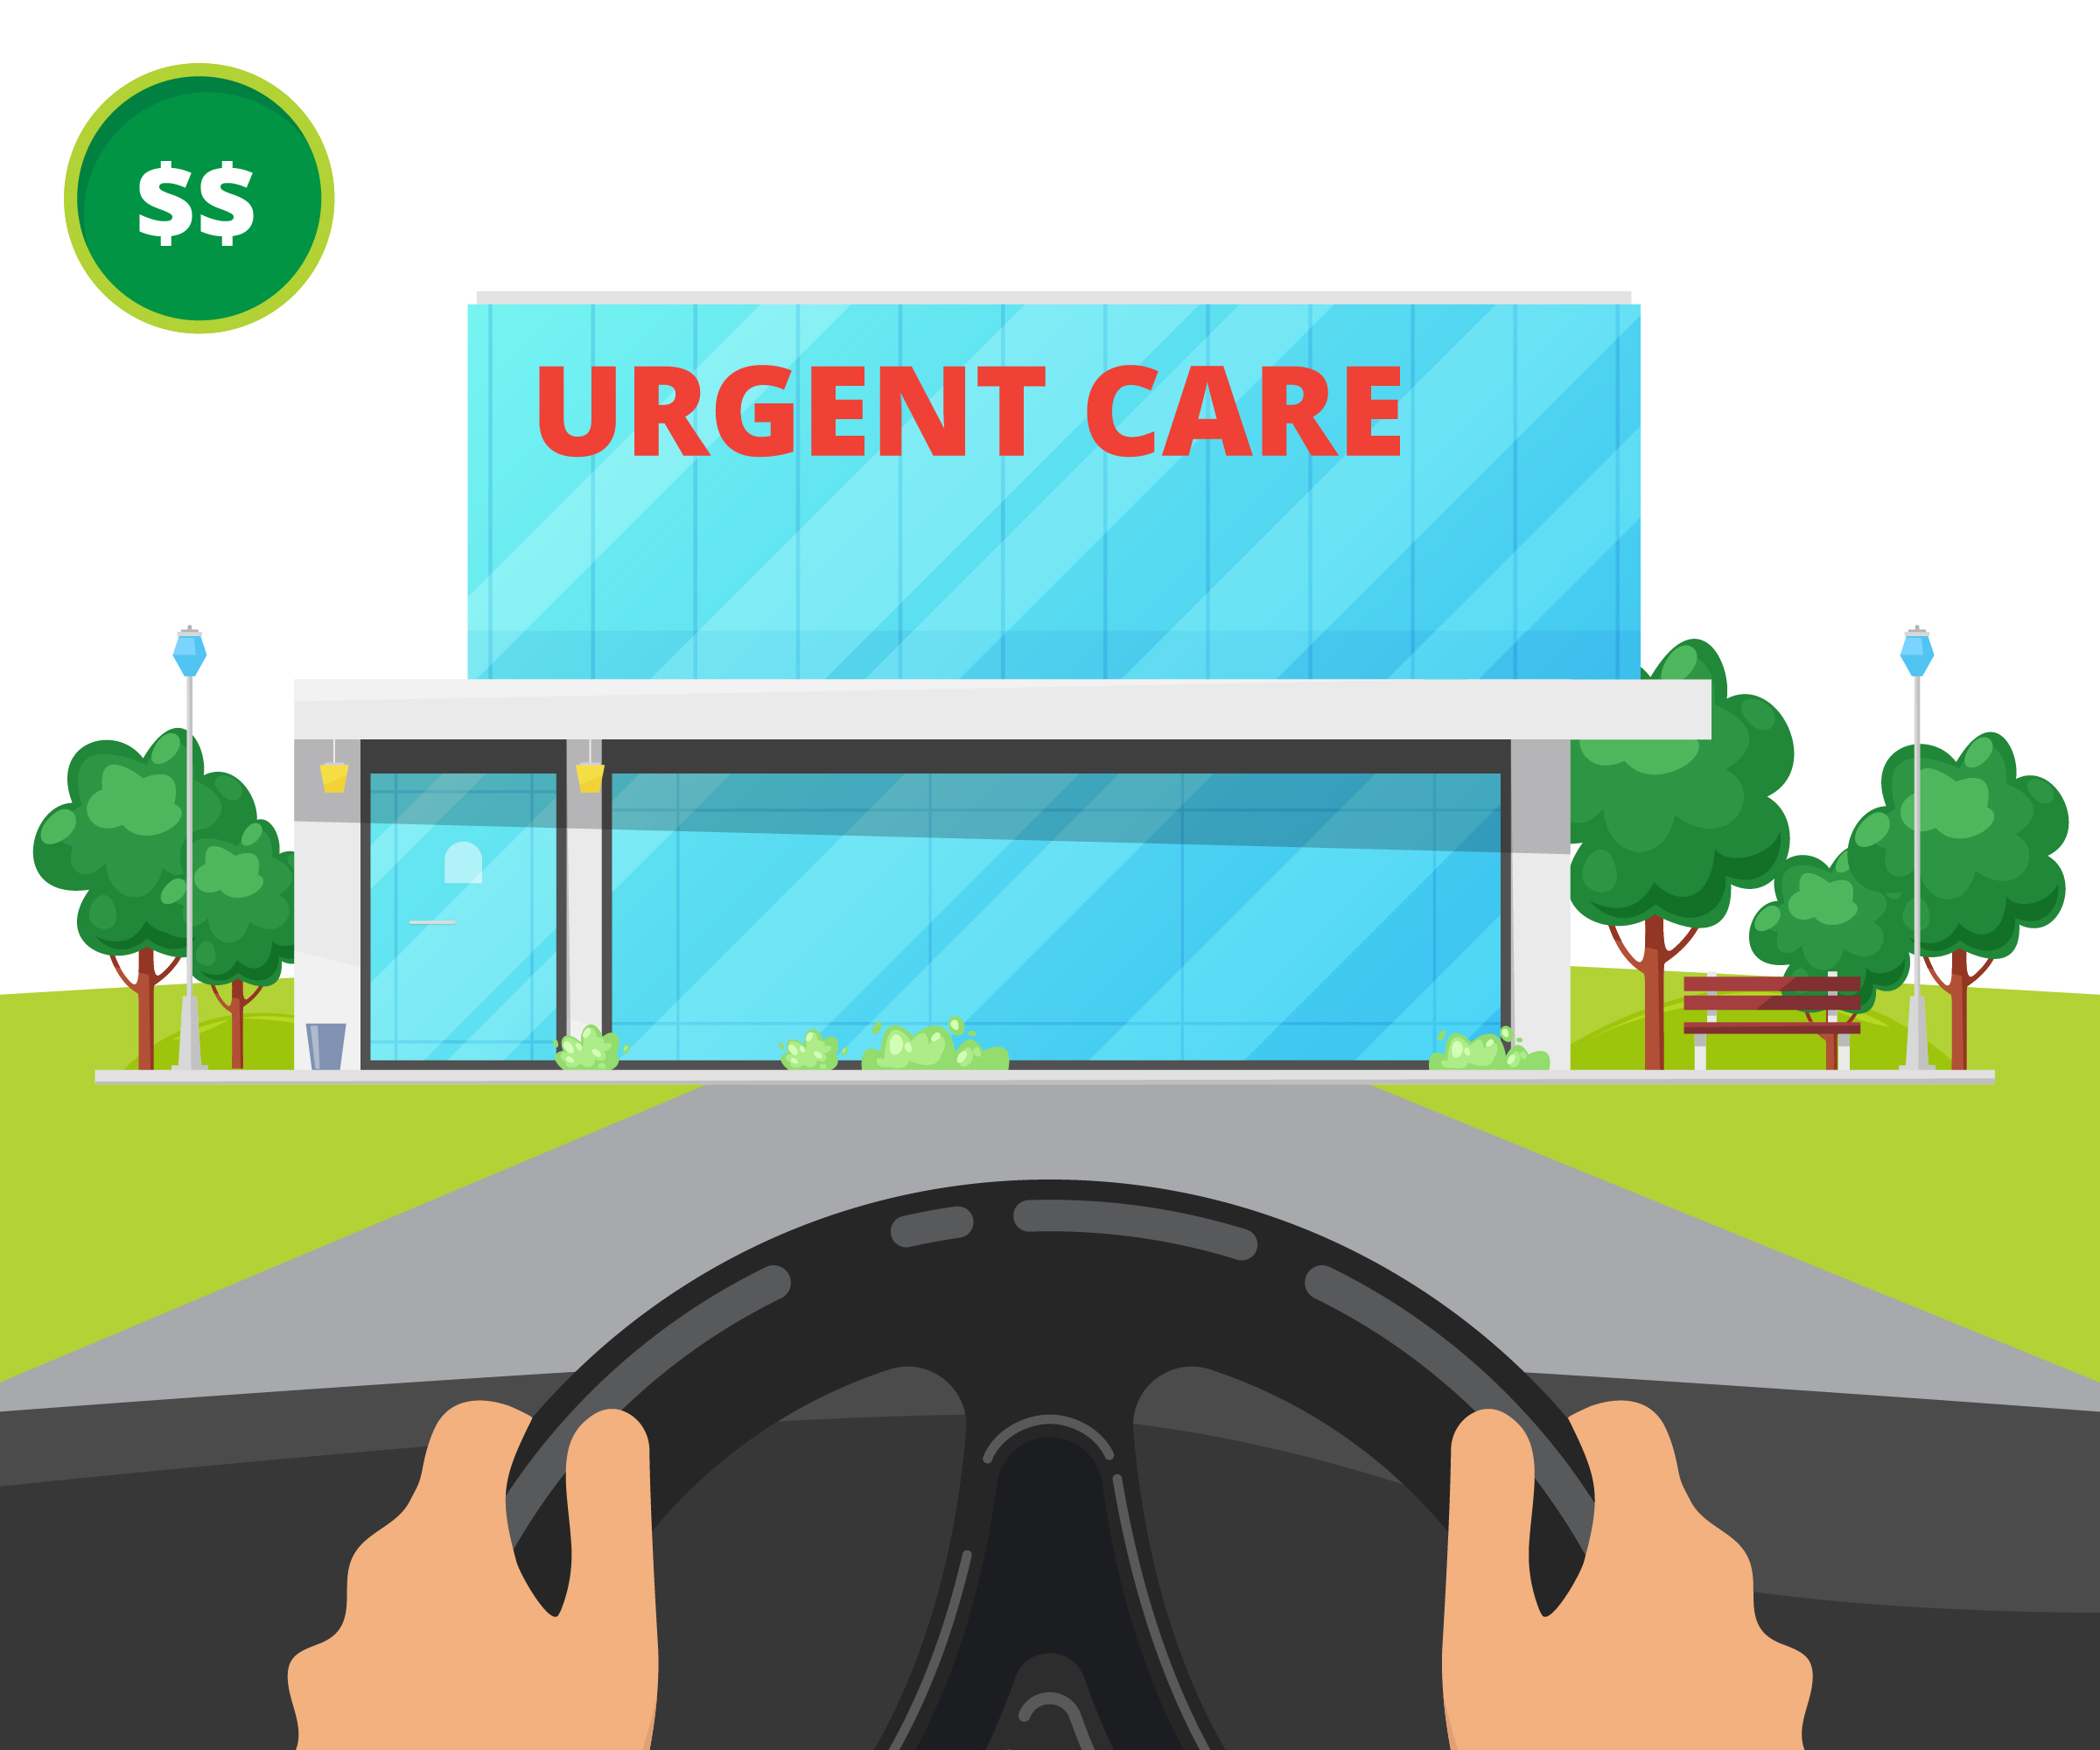 Illustration of an urgent care center